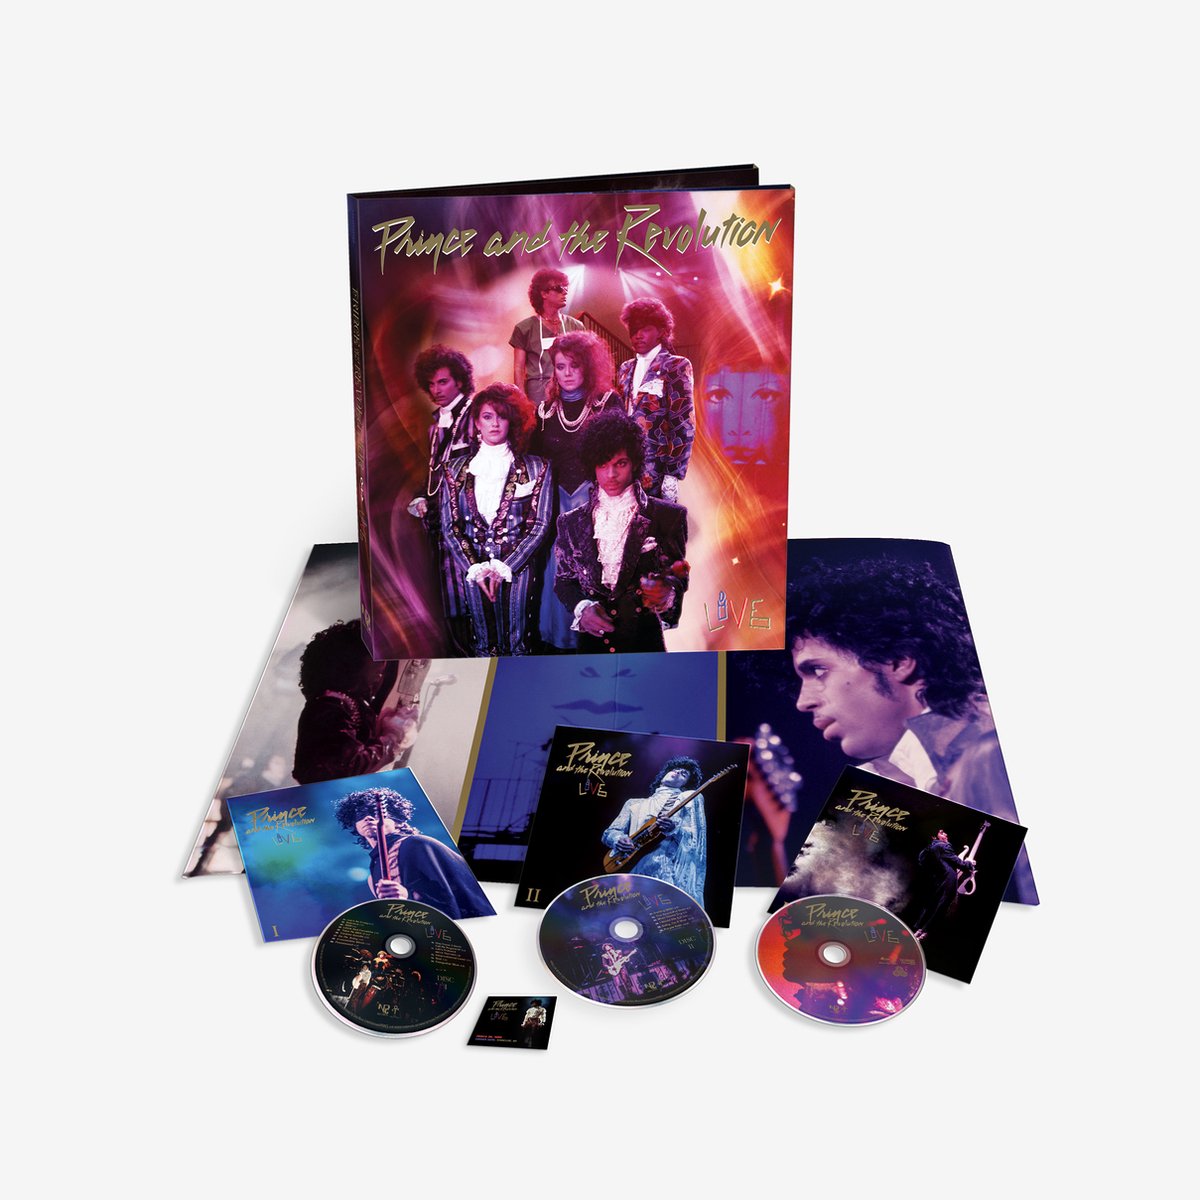 Prince & The Revolution (CD + Blu-ray) - Prince